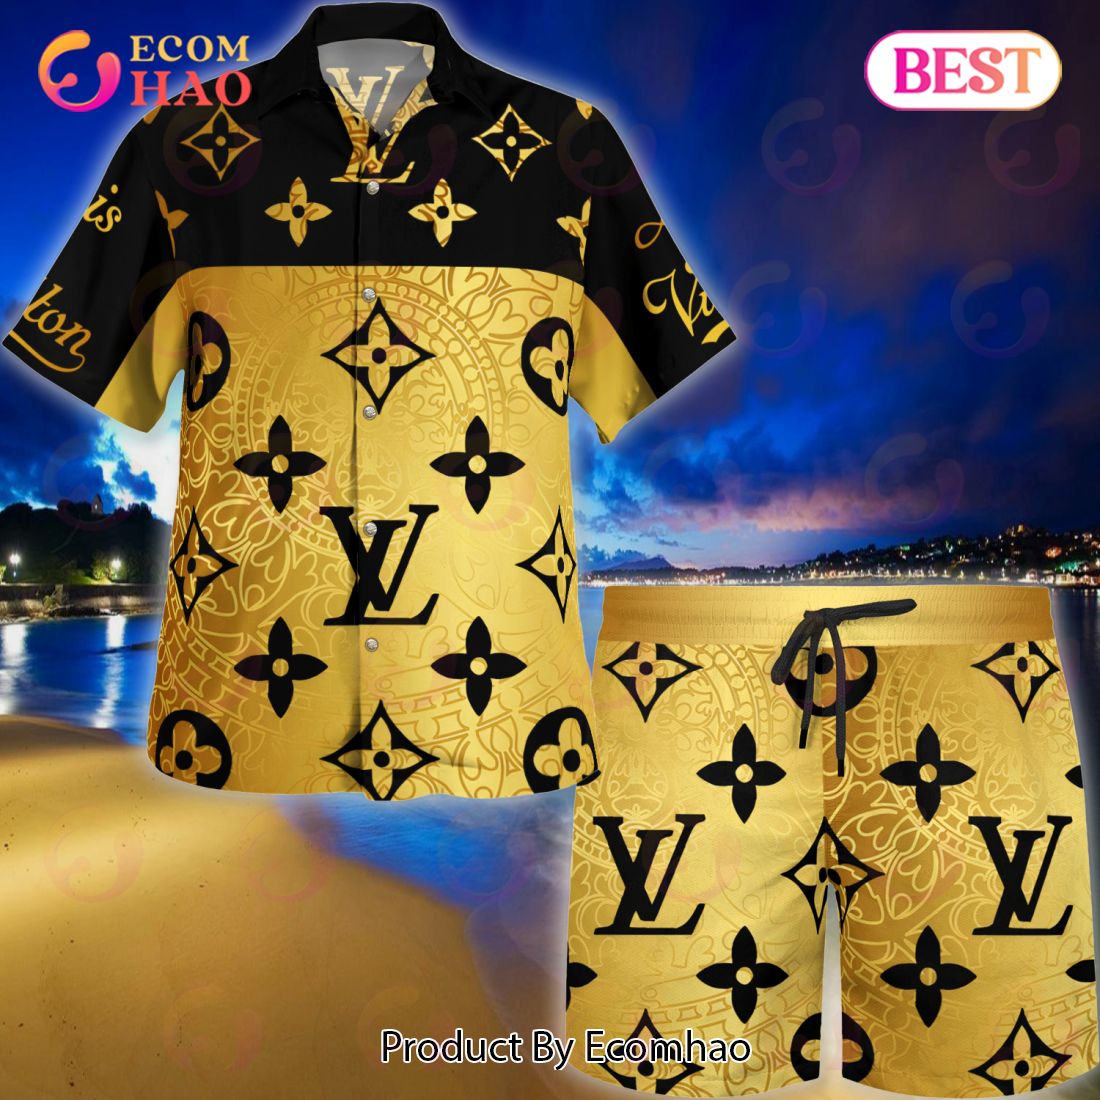 NEW Louis Vuitton Mix Supreme Hawaiian Shirt & Beach Shorts - Ecomhao Store